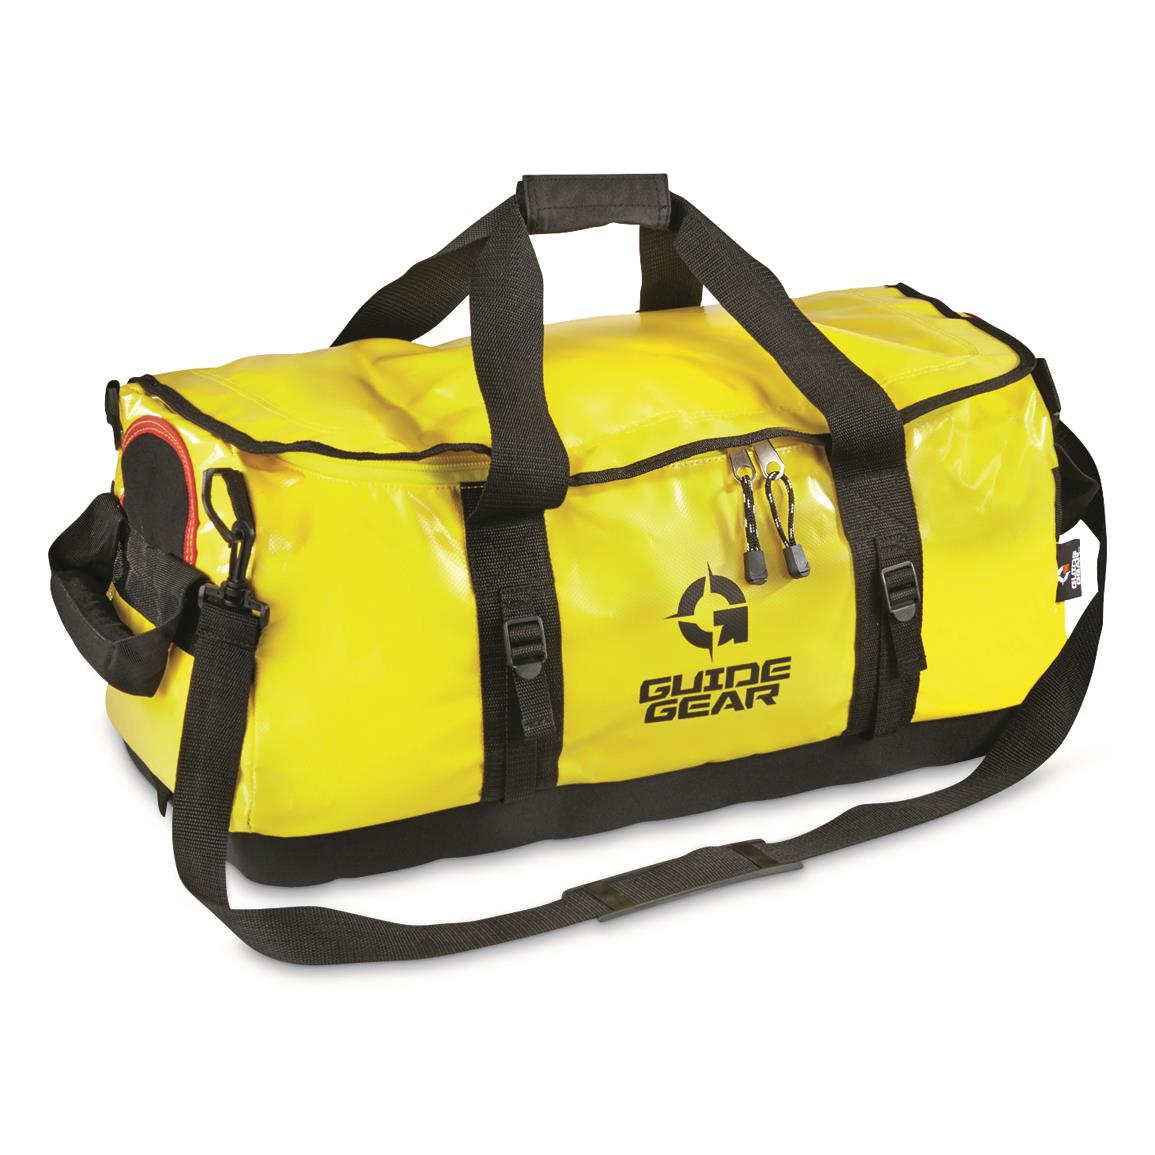 Guide Gear Boat Bag, Yellow